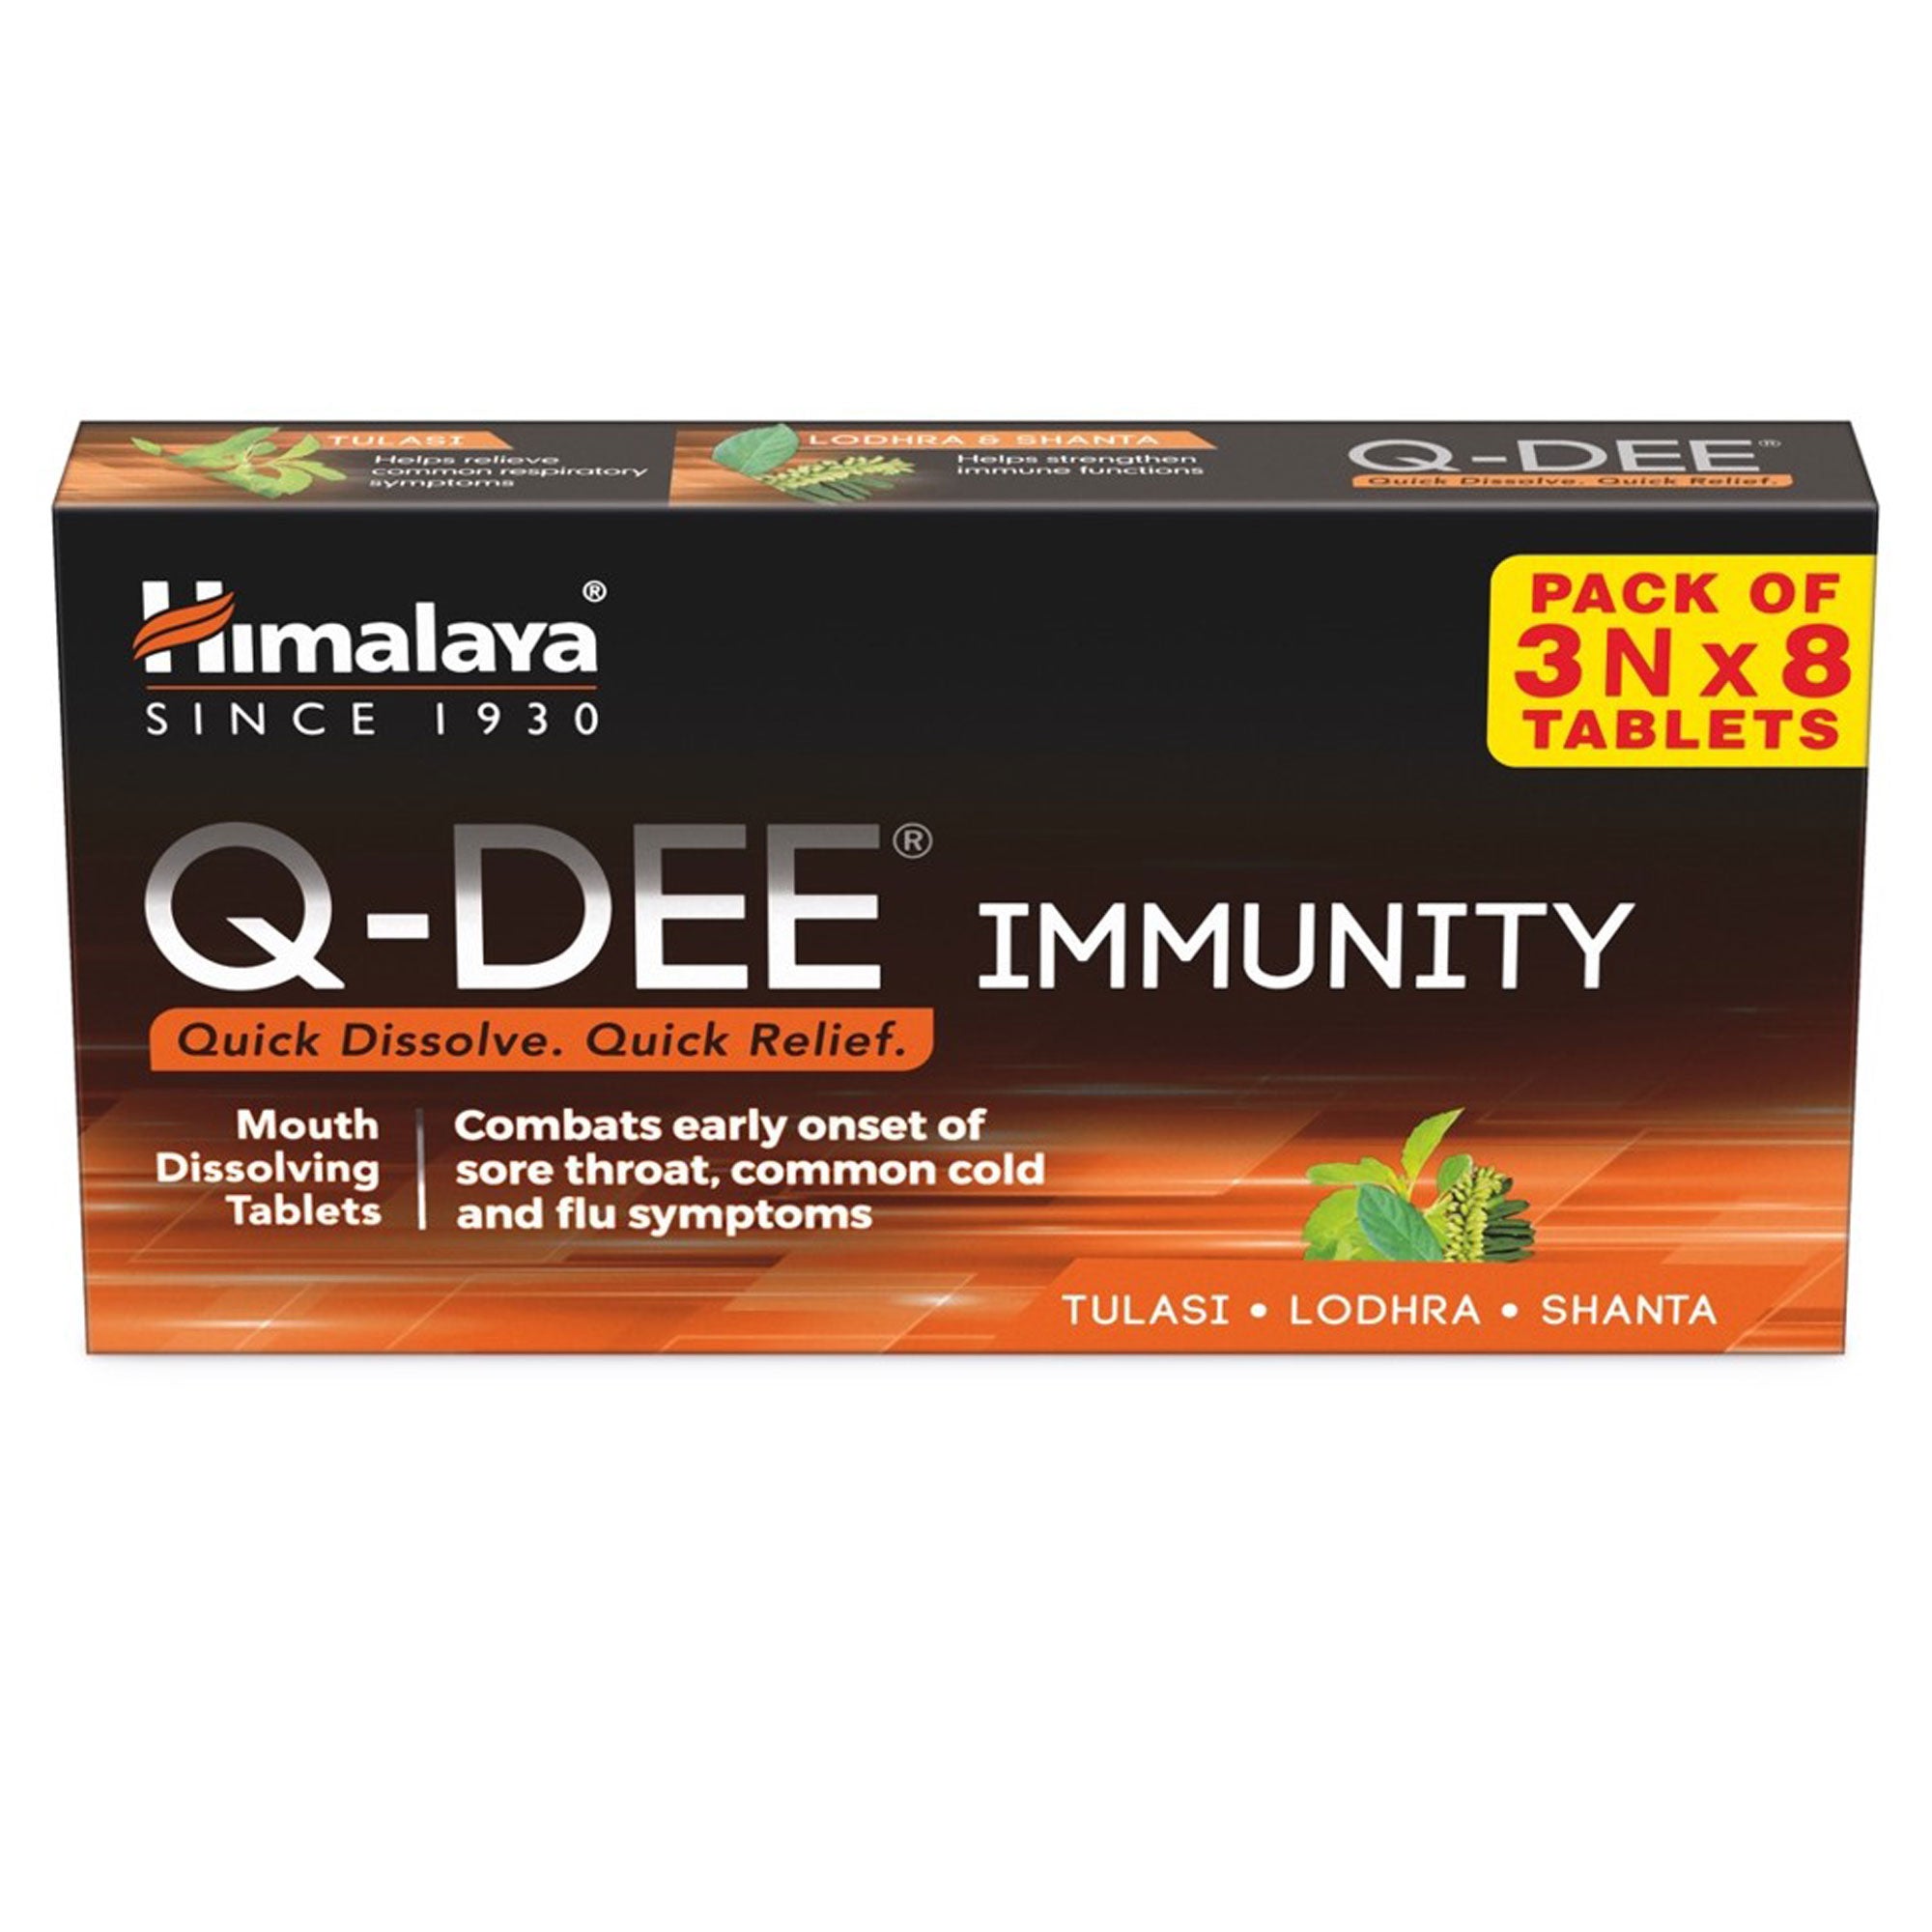 Himalaya Q-DEE Immunity Tablets - 3Nx8